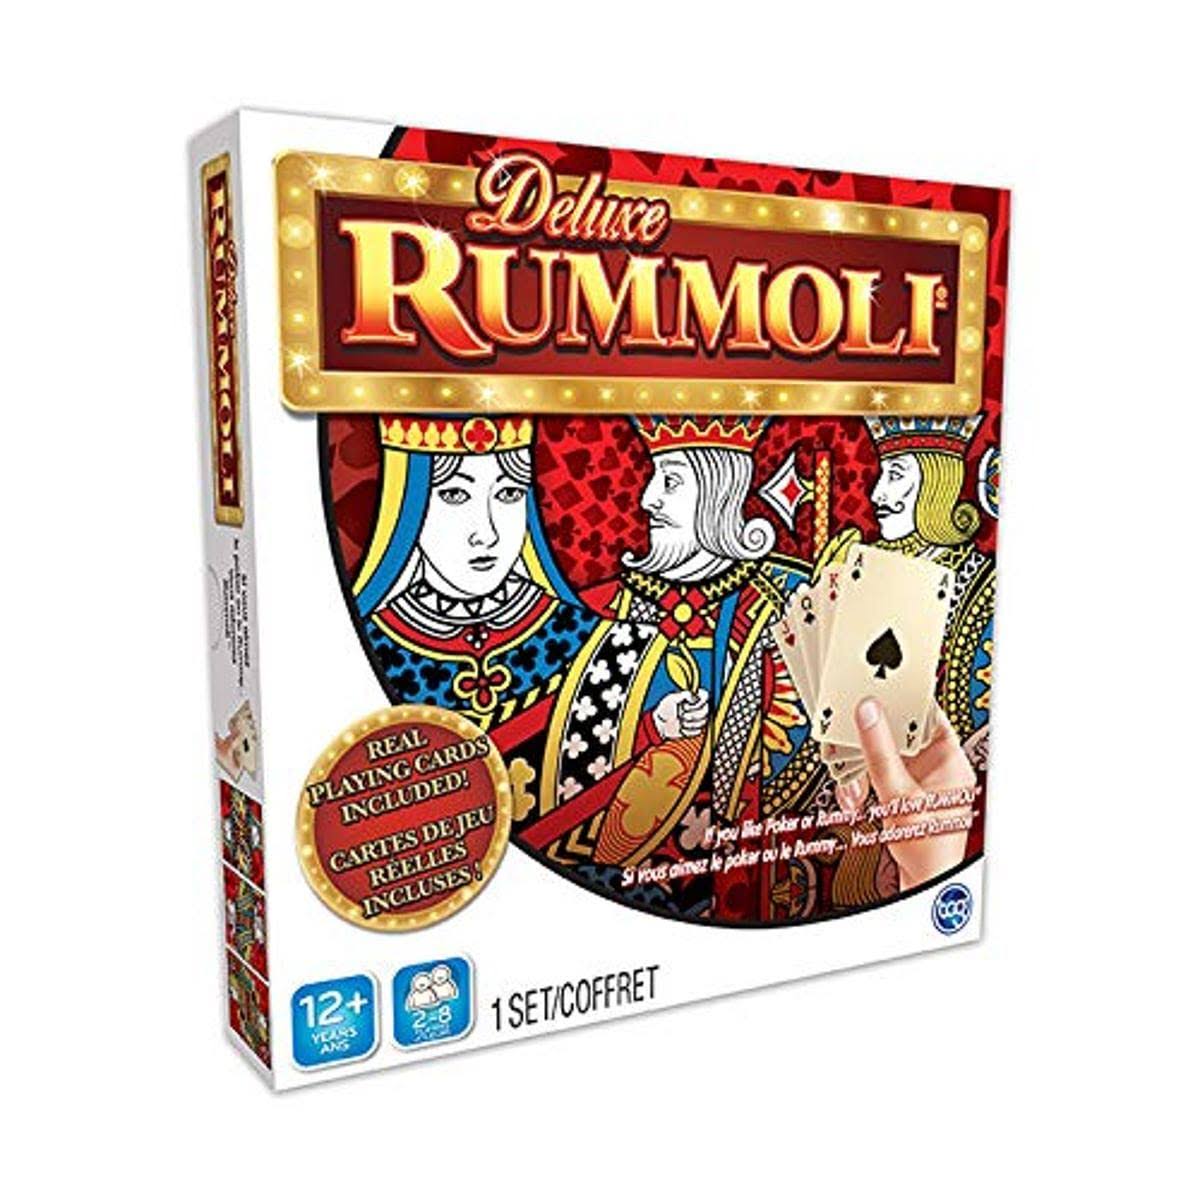 Deluxe Rummoli Game